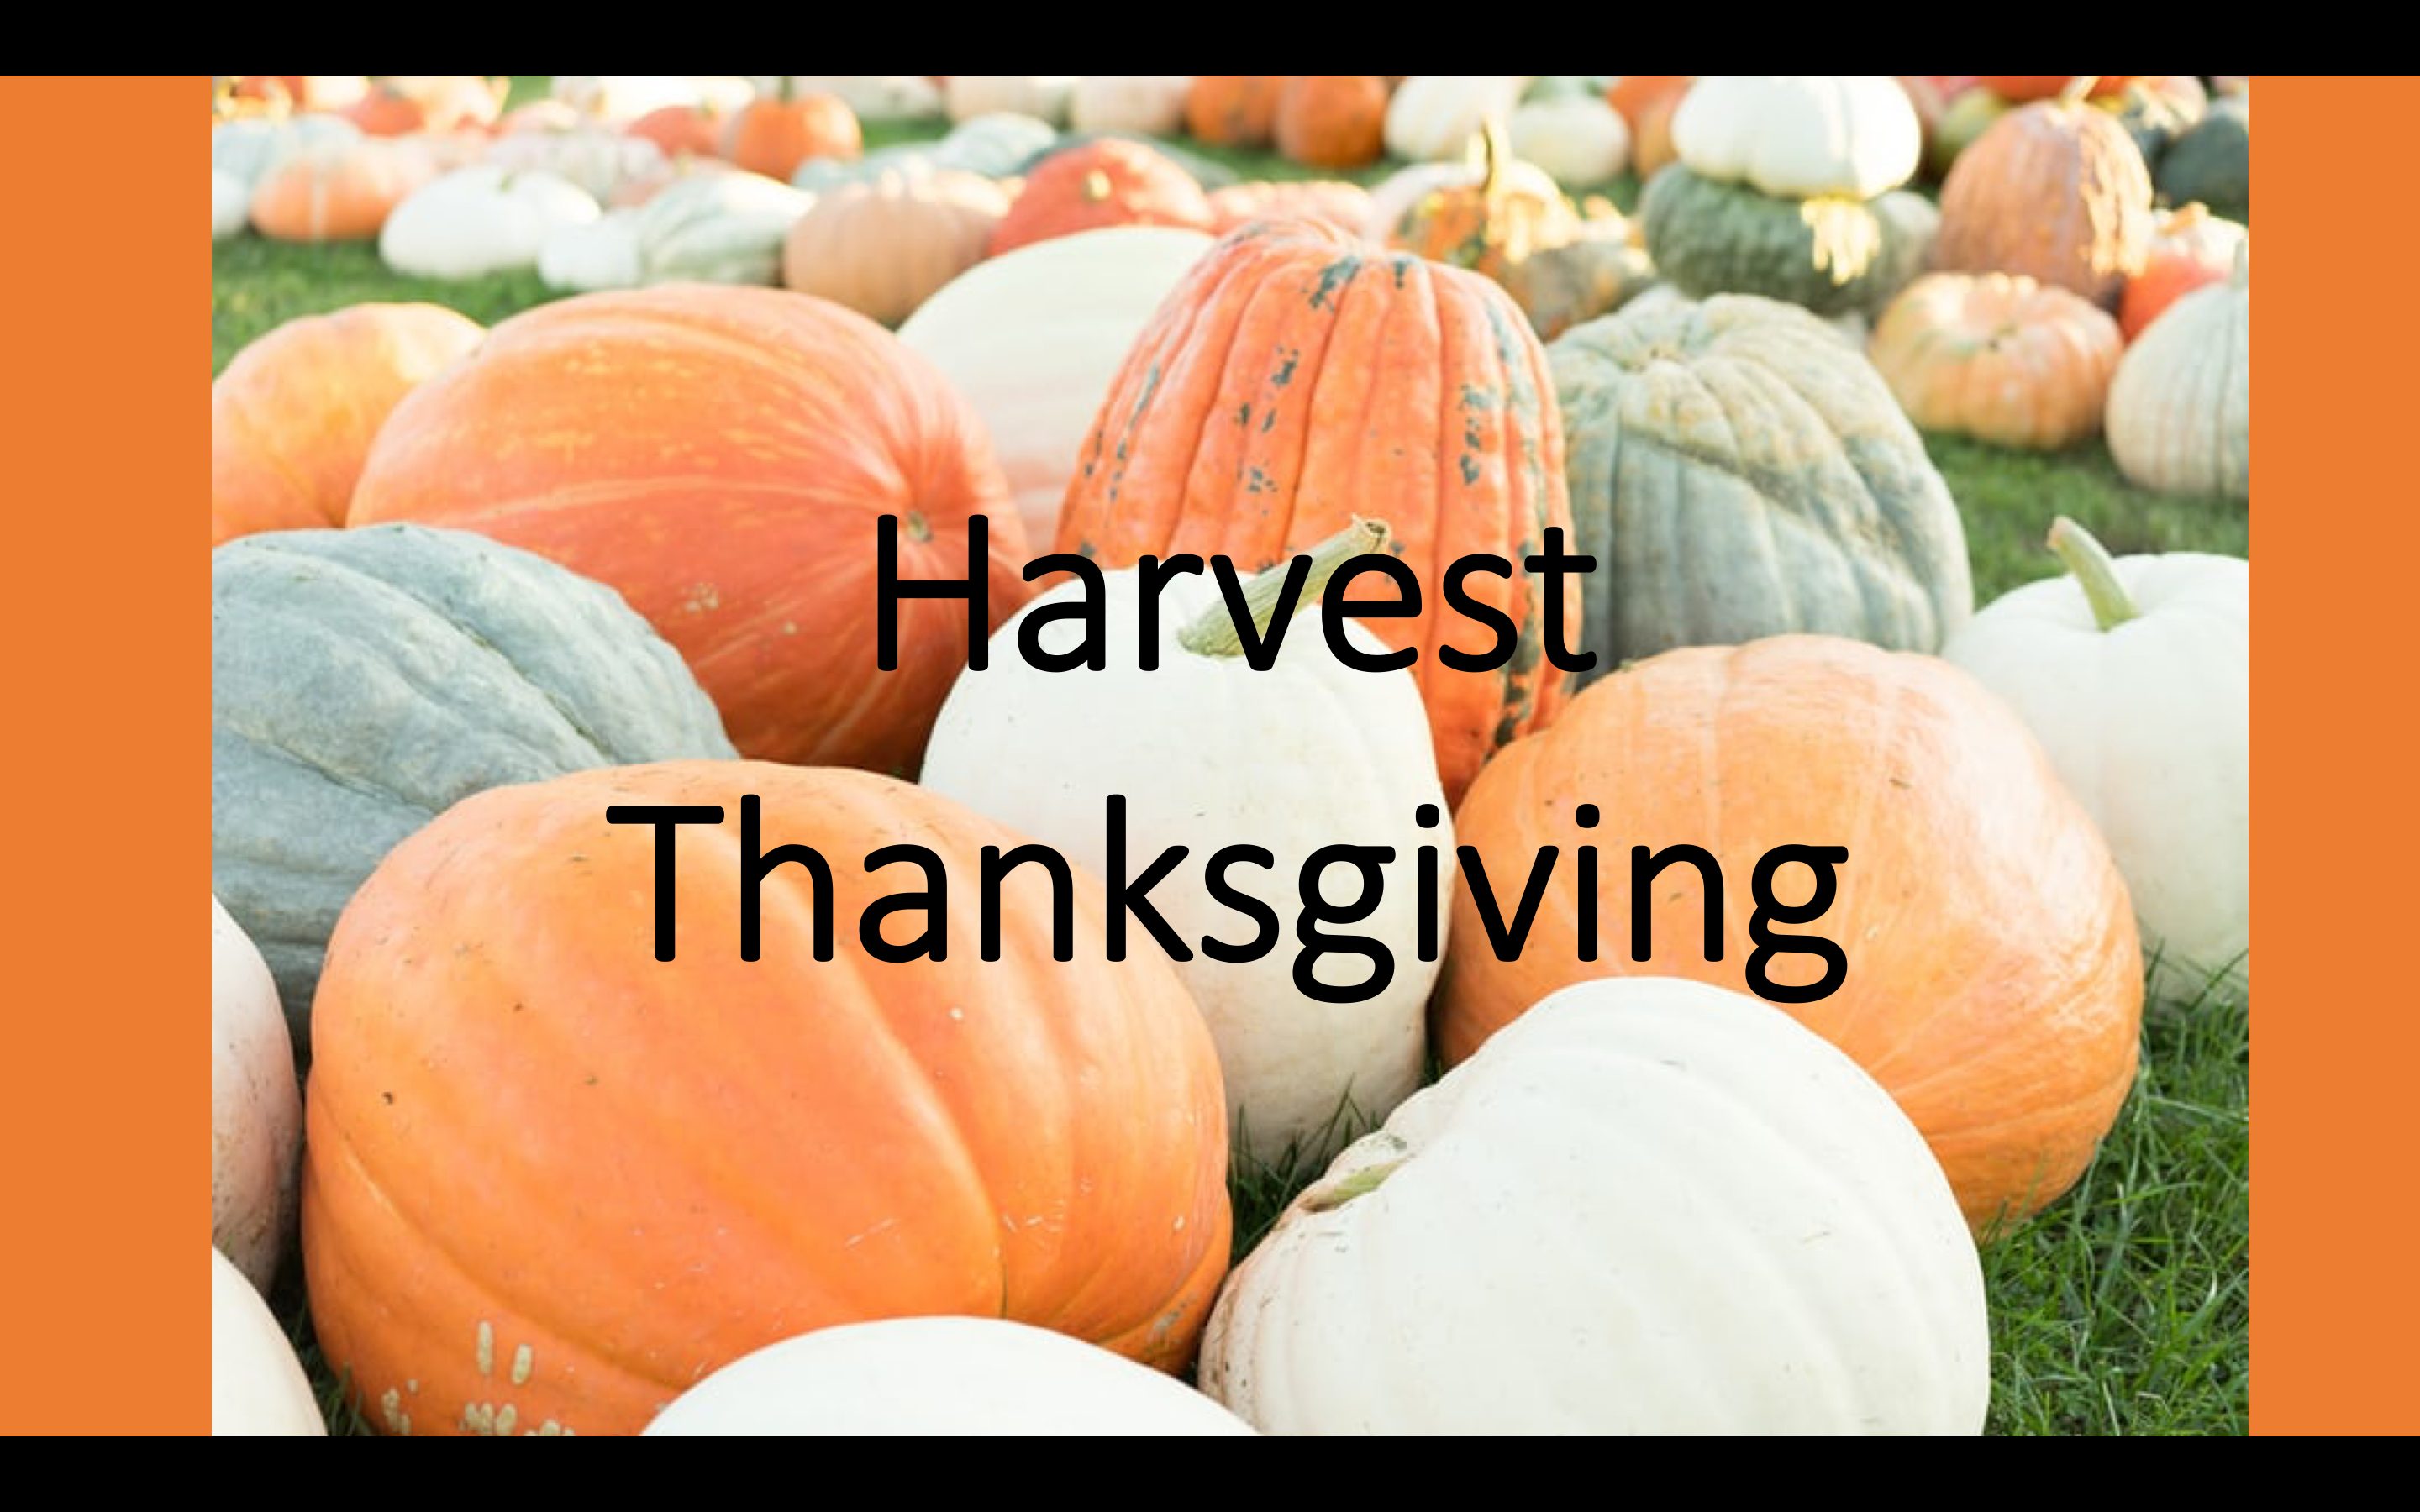 Harvest Thanksgiving service – catch up